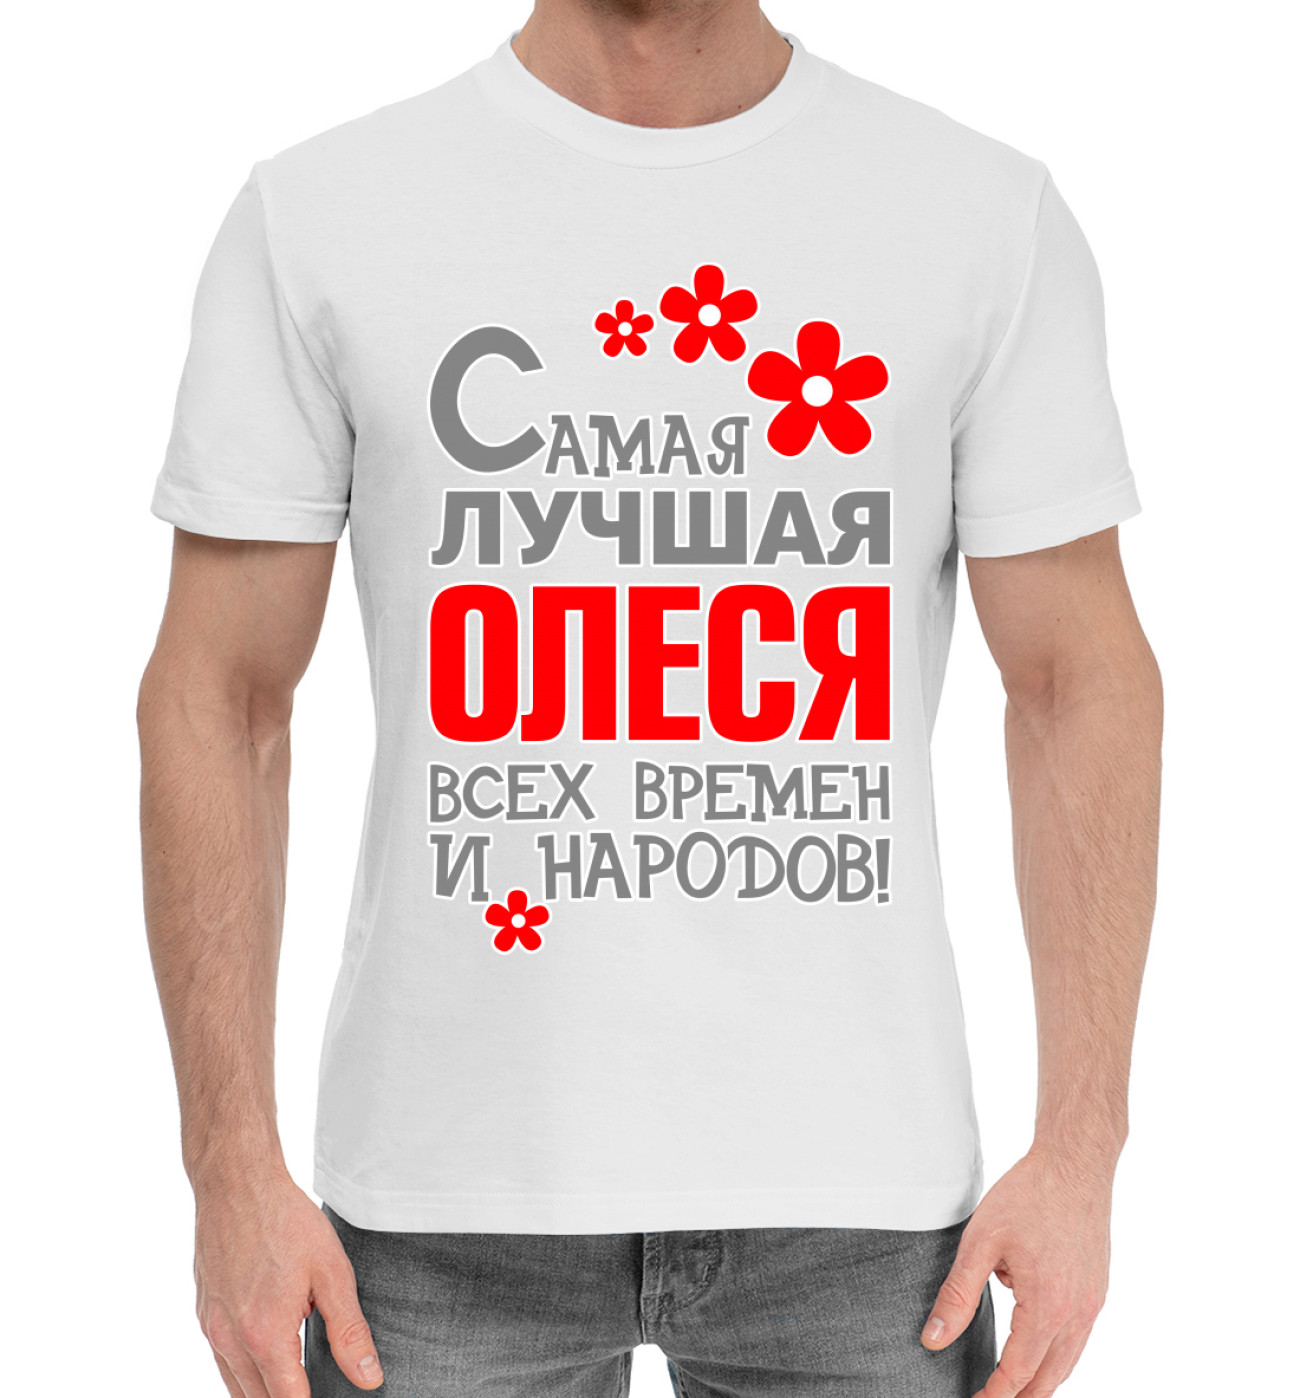 Мужская Хлопковая футболка Олеся, артикул: IMR-329476-hfu-2